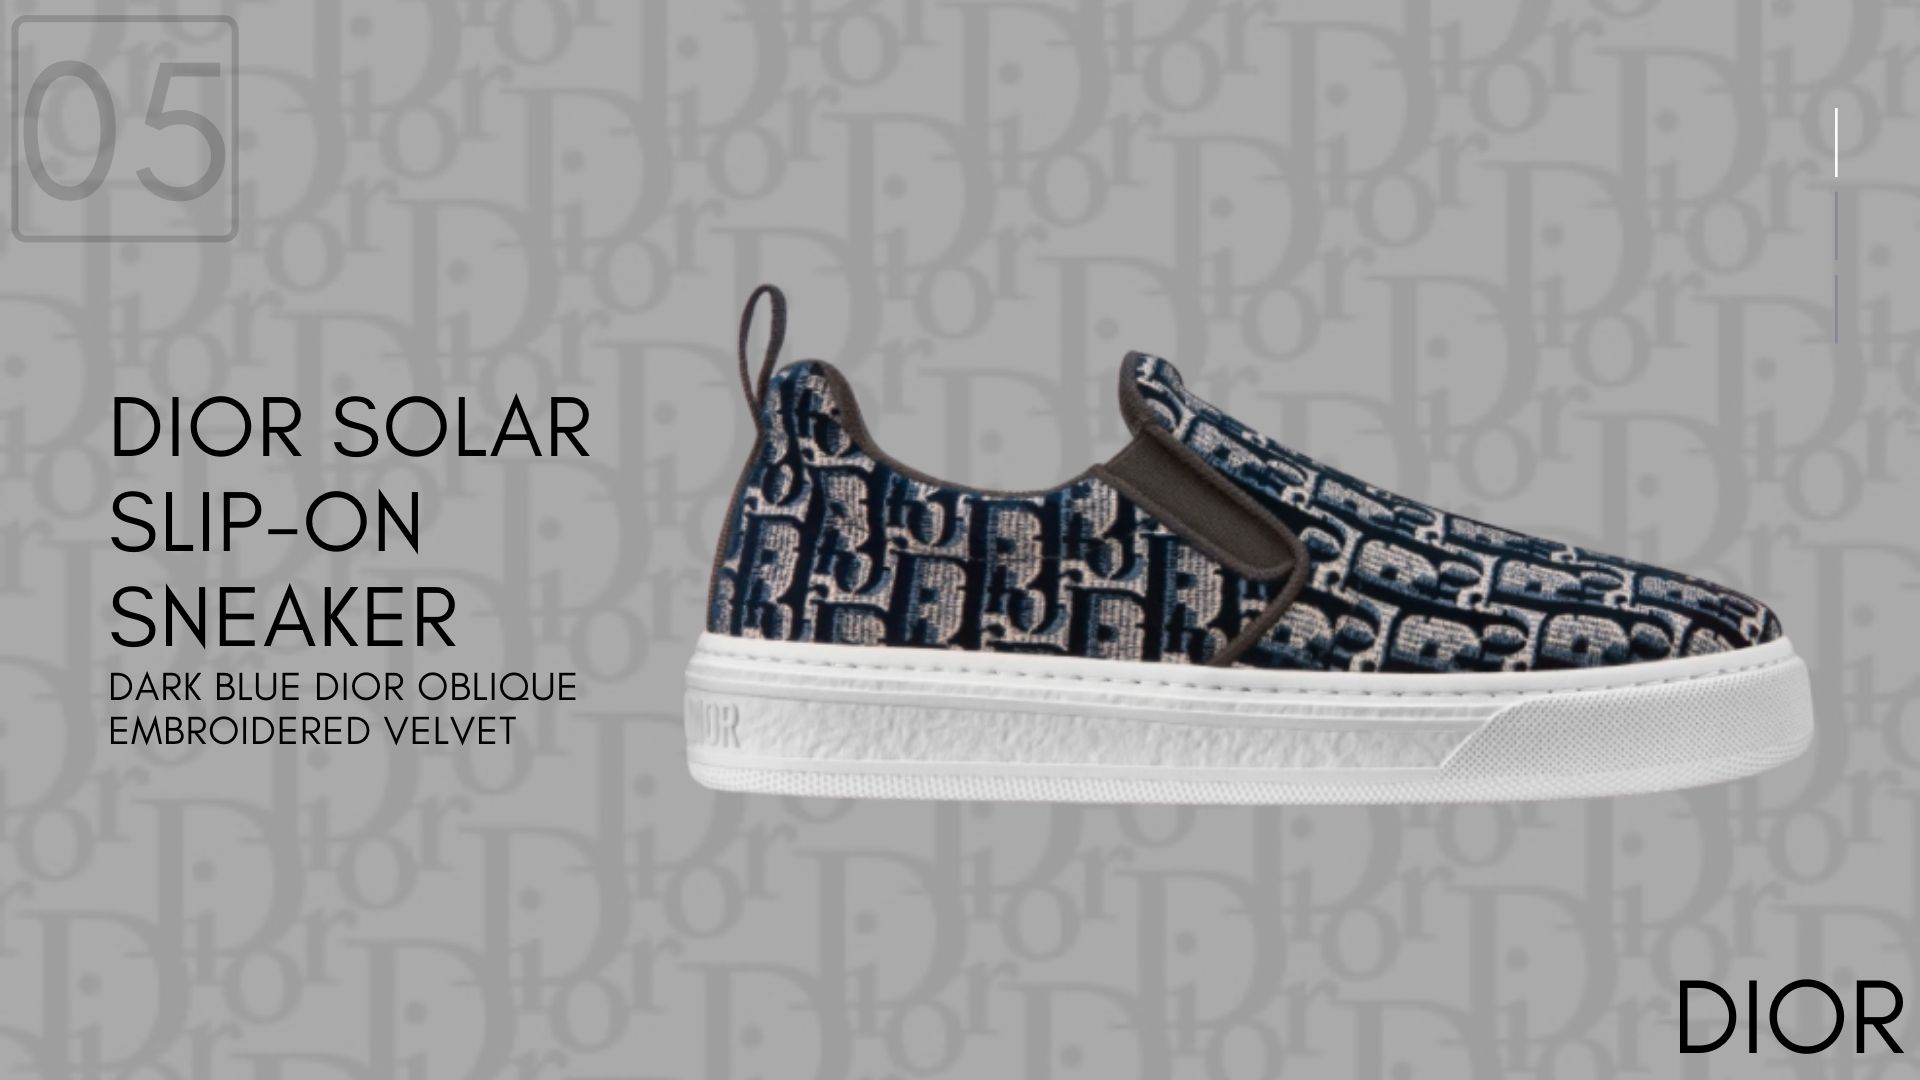 DIOR SOLAR SLIP-ON Dark Blue Dior Oblique Embroidered Velvet-Dior Sneakers-รองเท้าดิออร์-10 dior sneakers-dior 10 sneakers